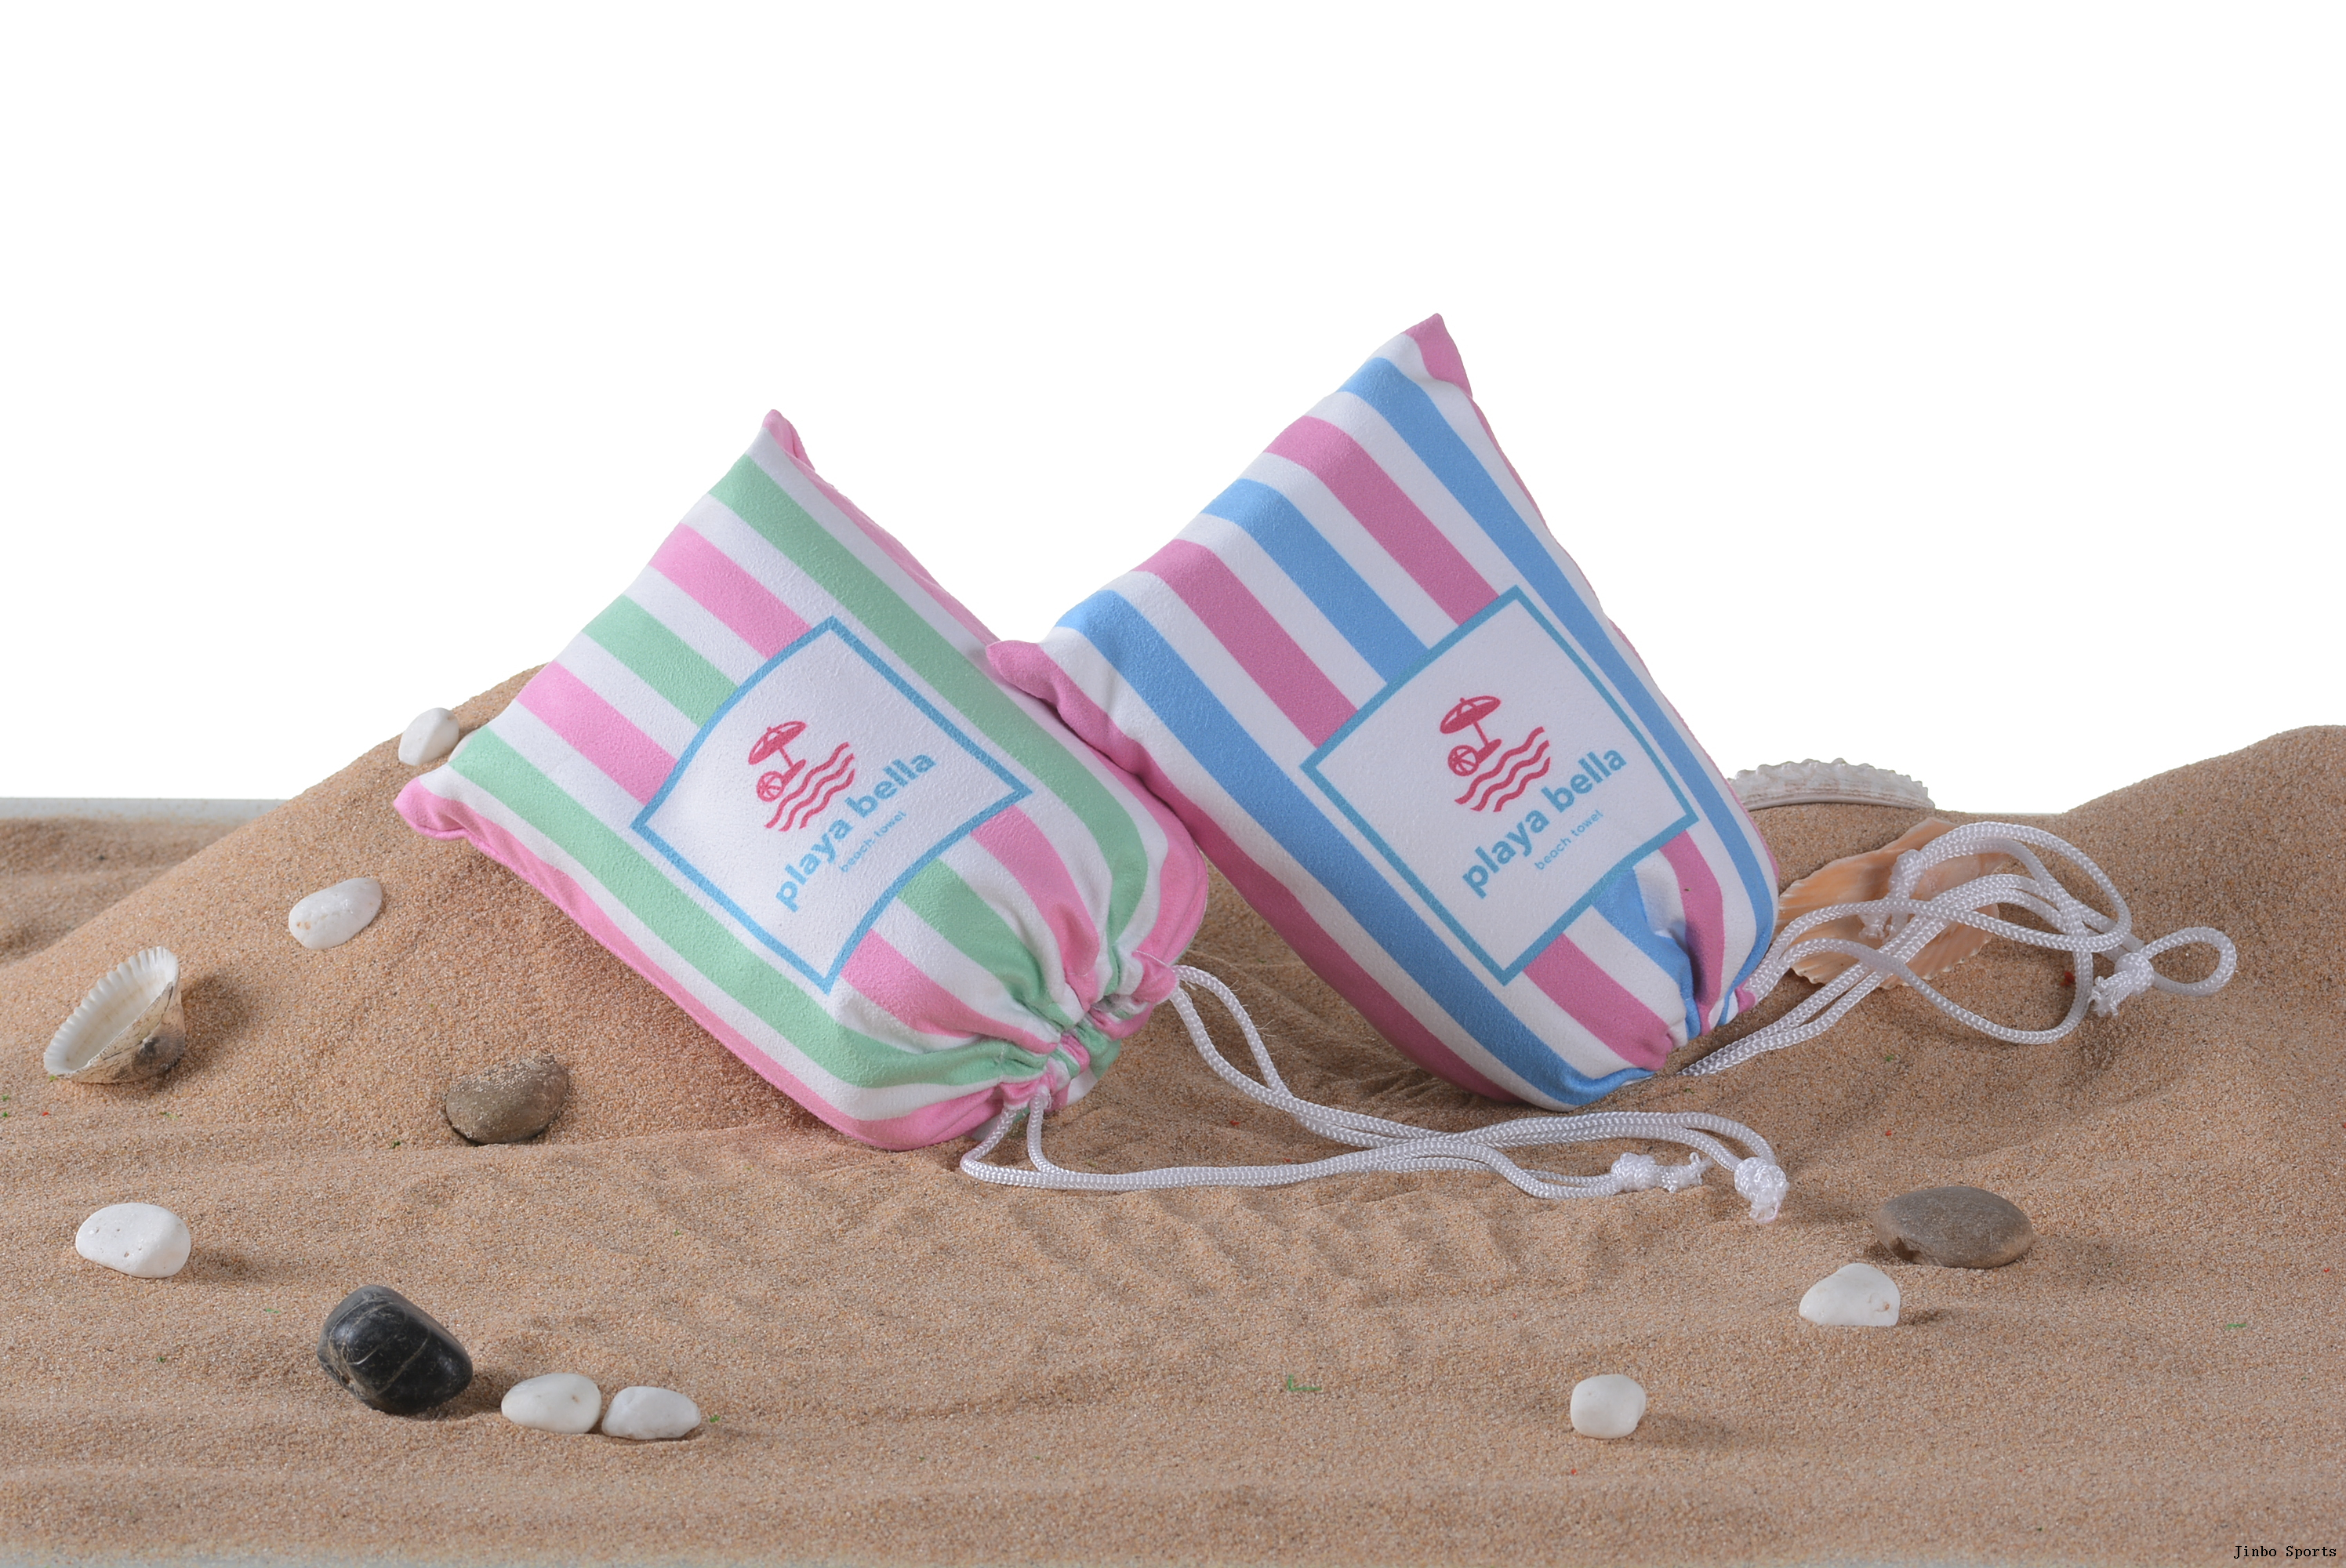 Microfiber Beach Towels with Custom Print And Bag Super Dry Eco Friendly